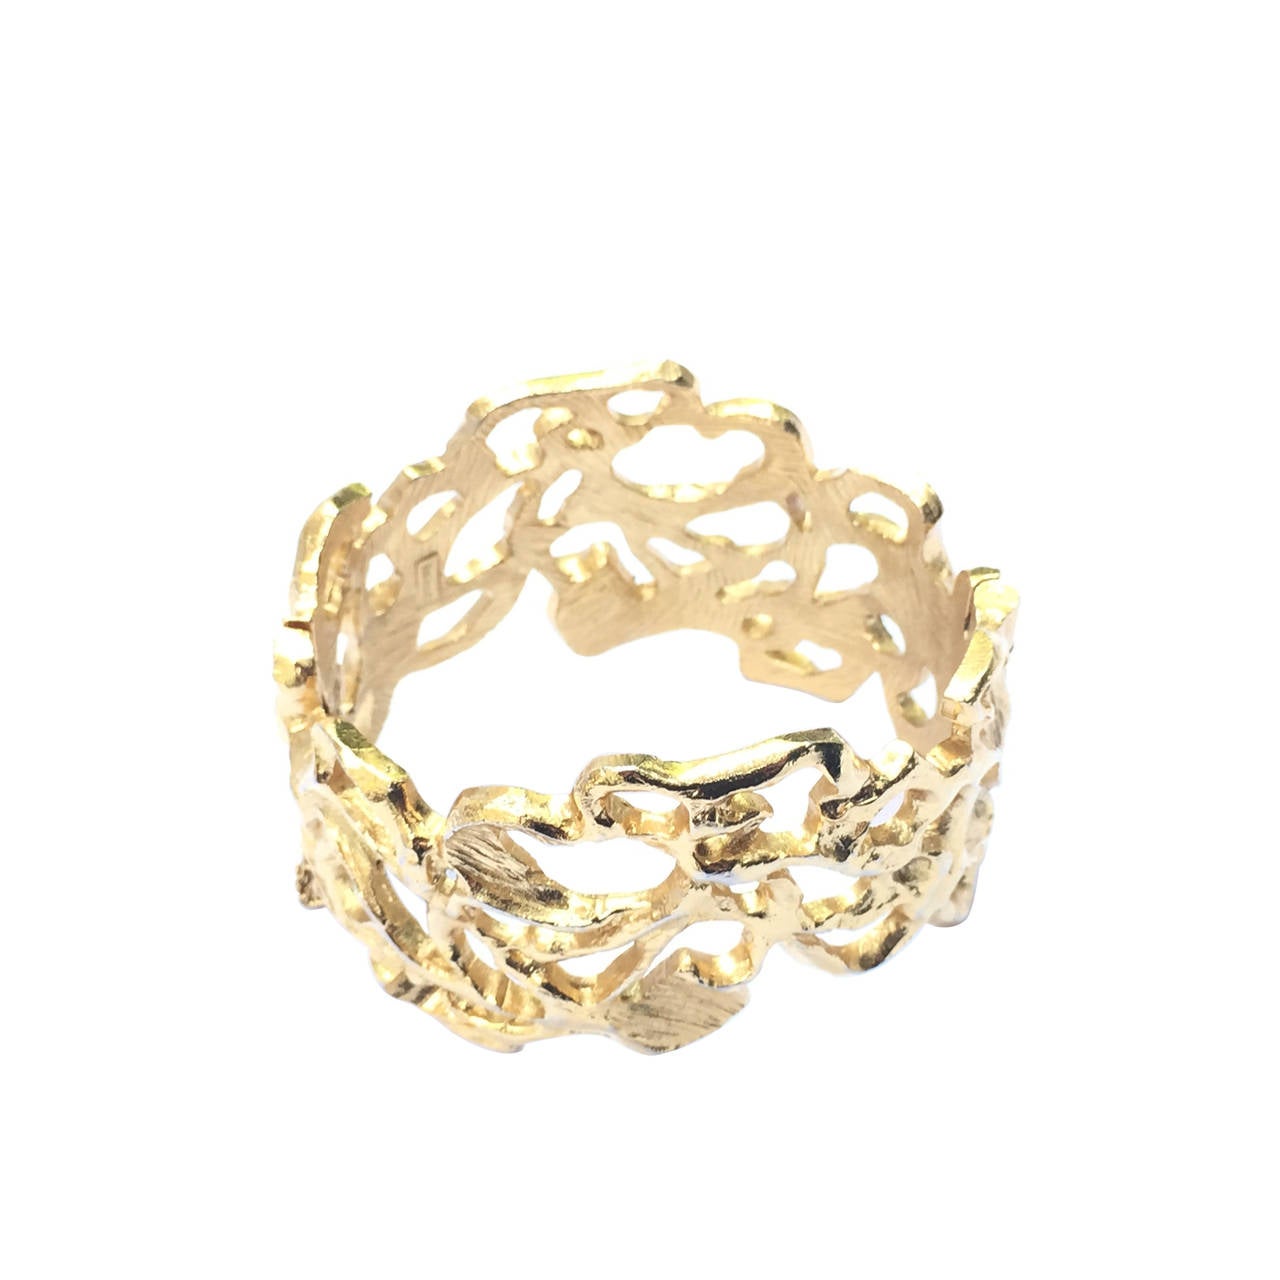 Jonathan Bailey for Trifari 1970s Sculpturesque modernist gold bracelet. For Sale